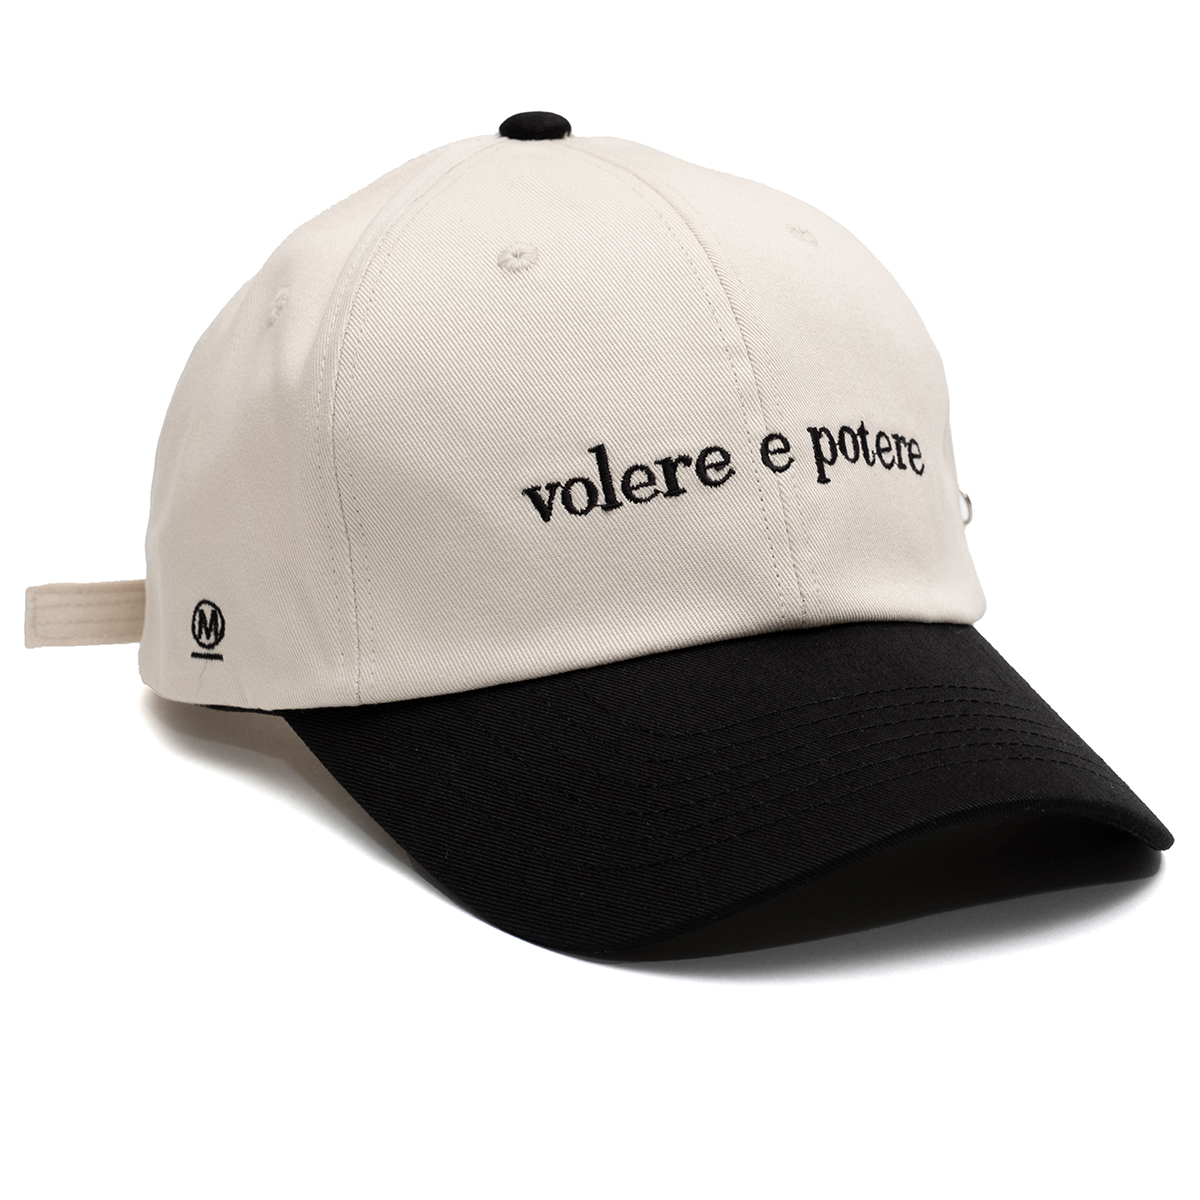 BTS着用 MACK BARRY CAP マクバリー 国内正規品 キャップ 帽子 ヘア